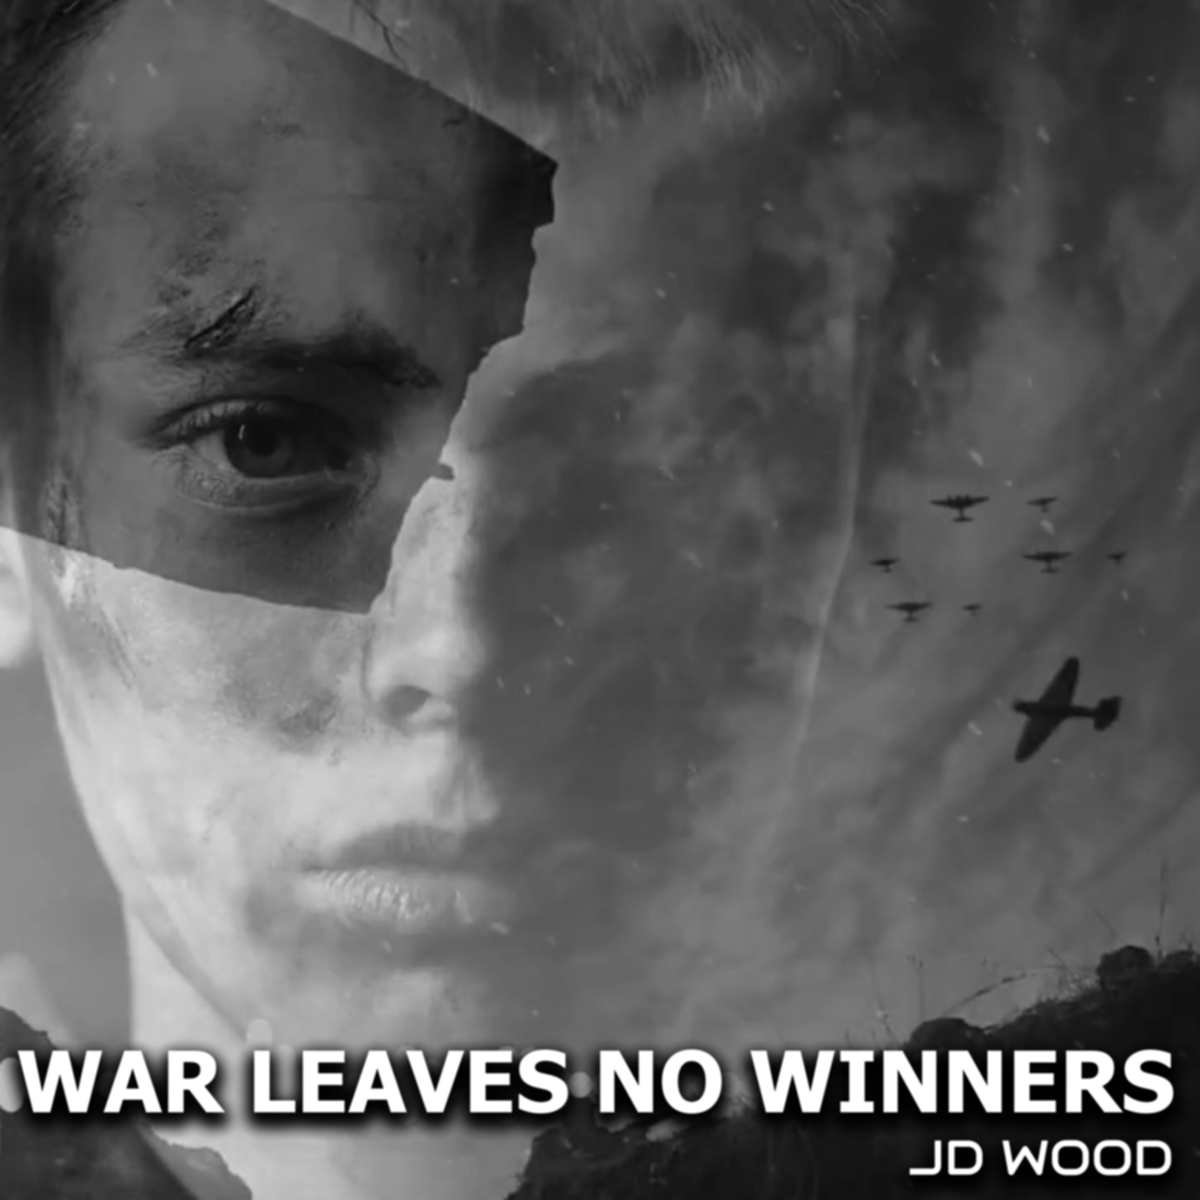 JD Wood - War leaves no winners Cover